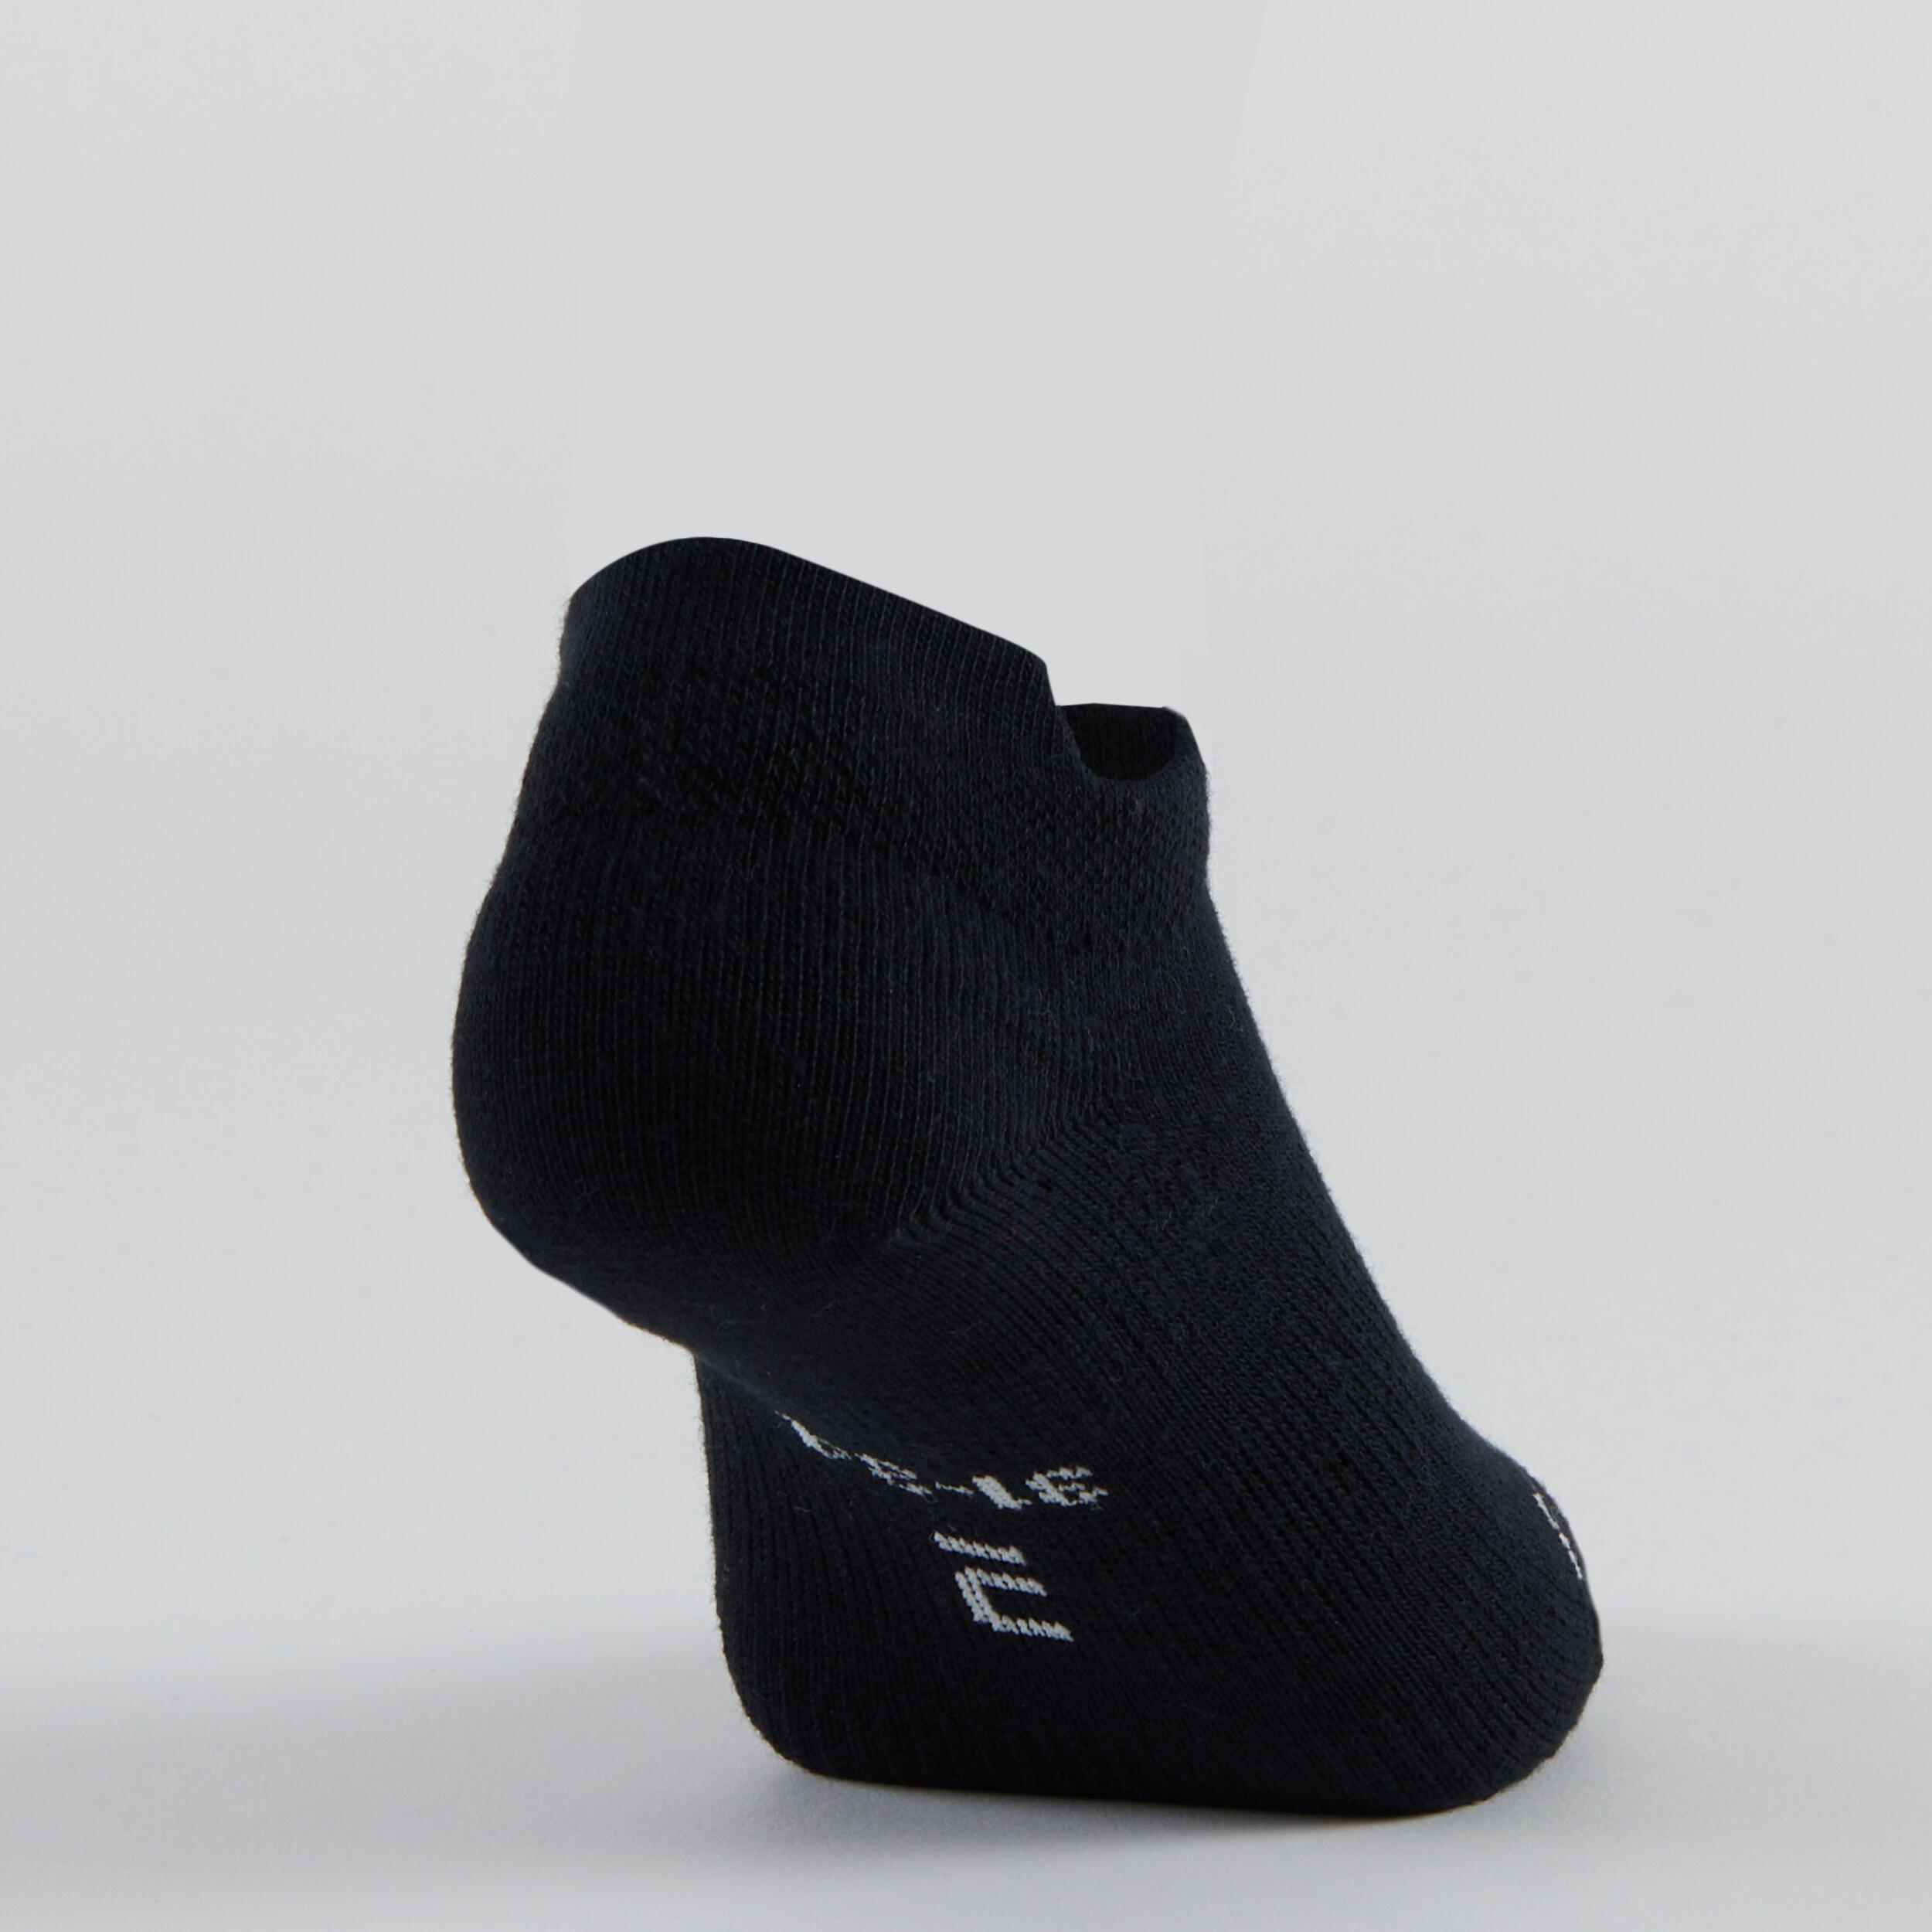 Low Sports Socks RS 160 Tri-Pack - Off-White/Black 13/14